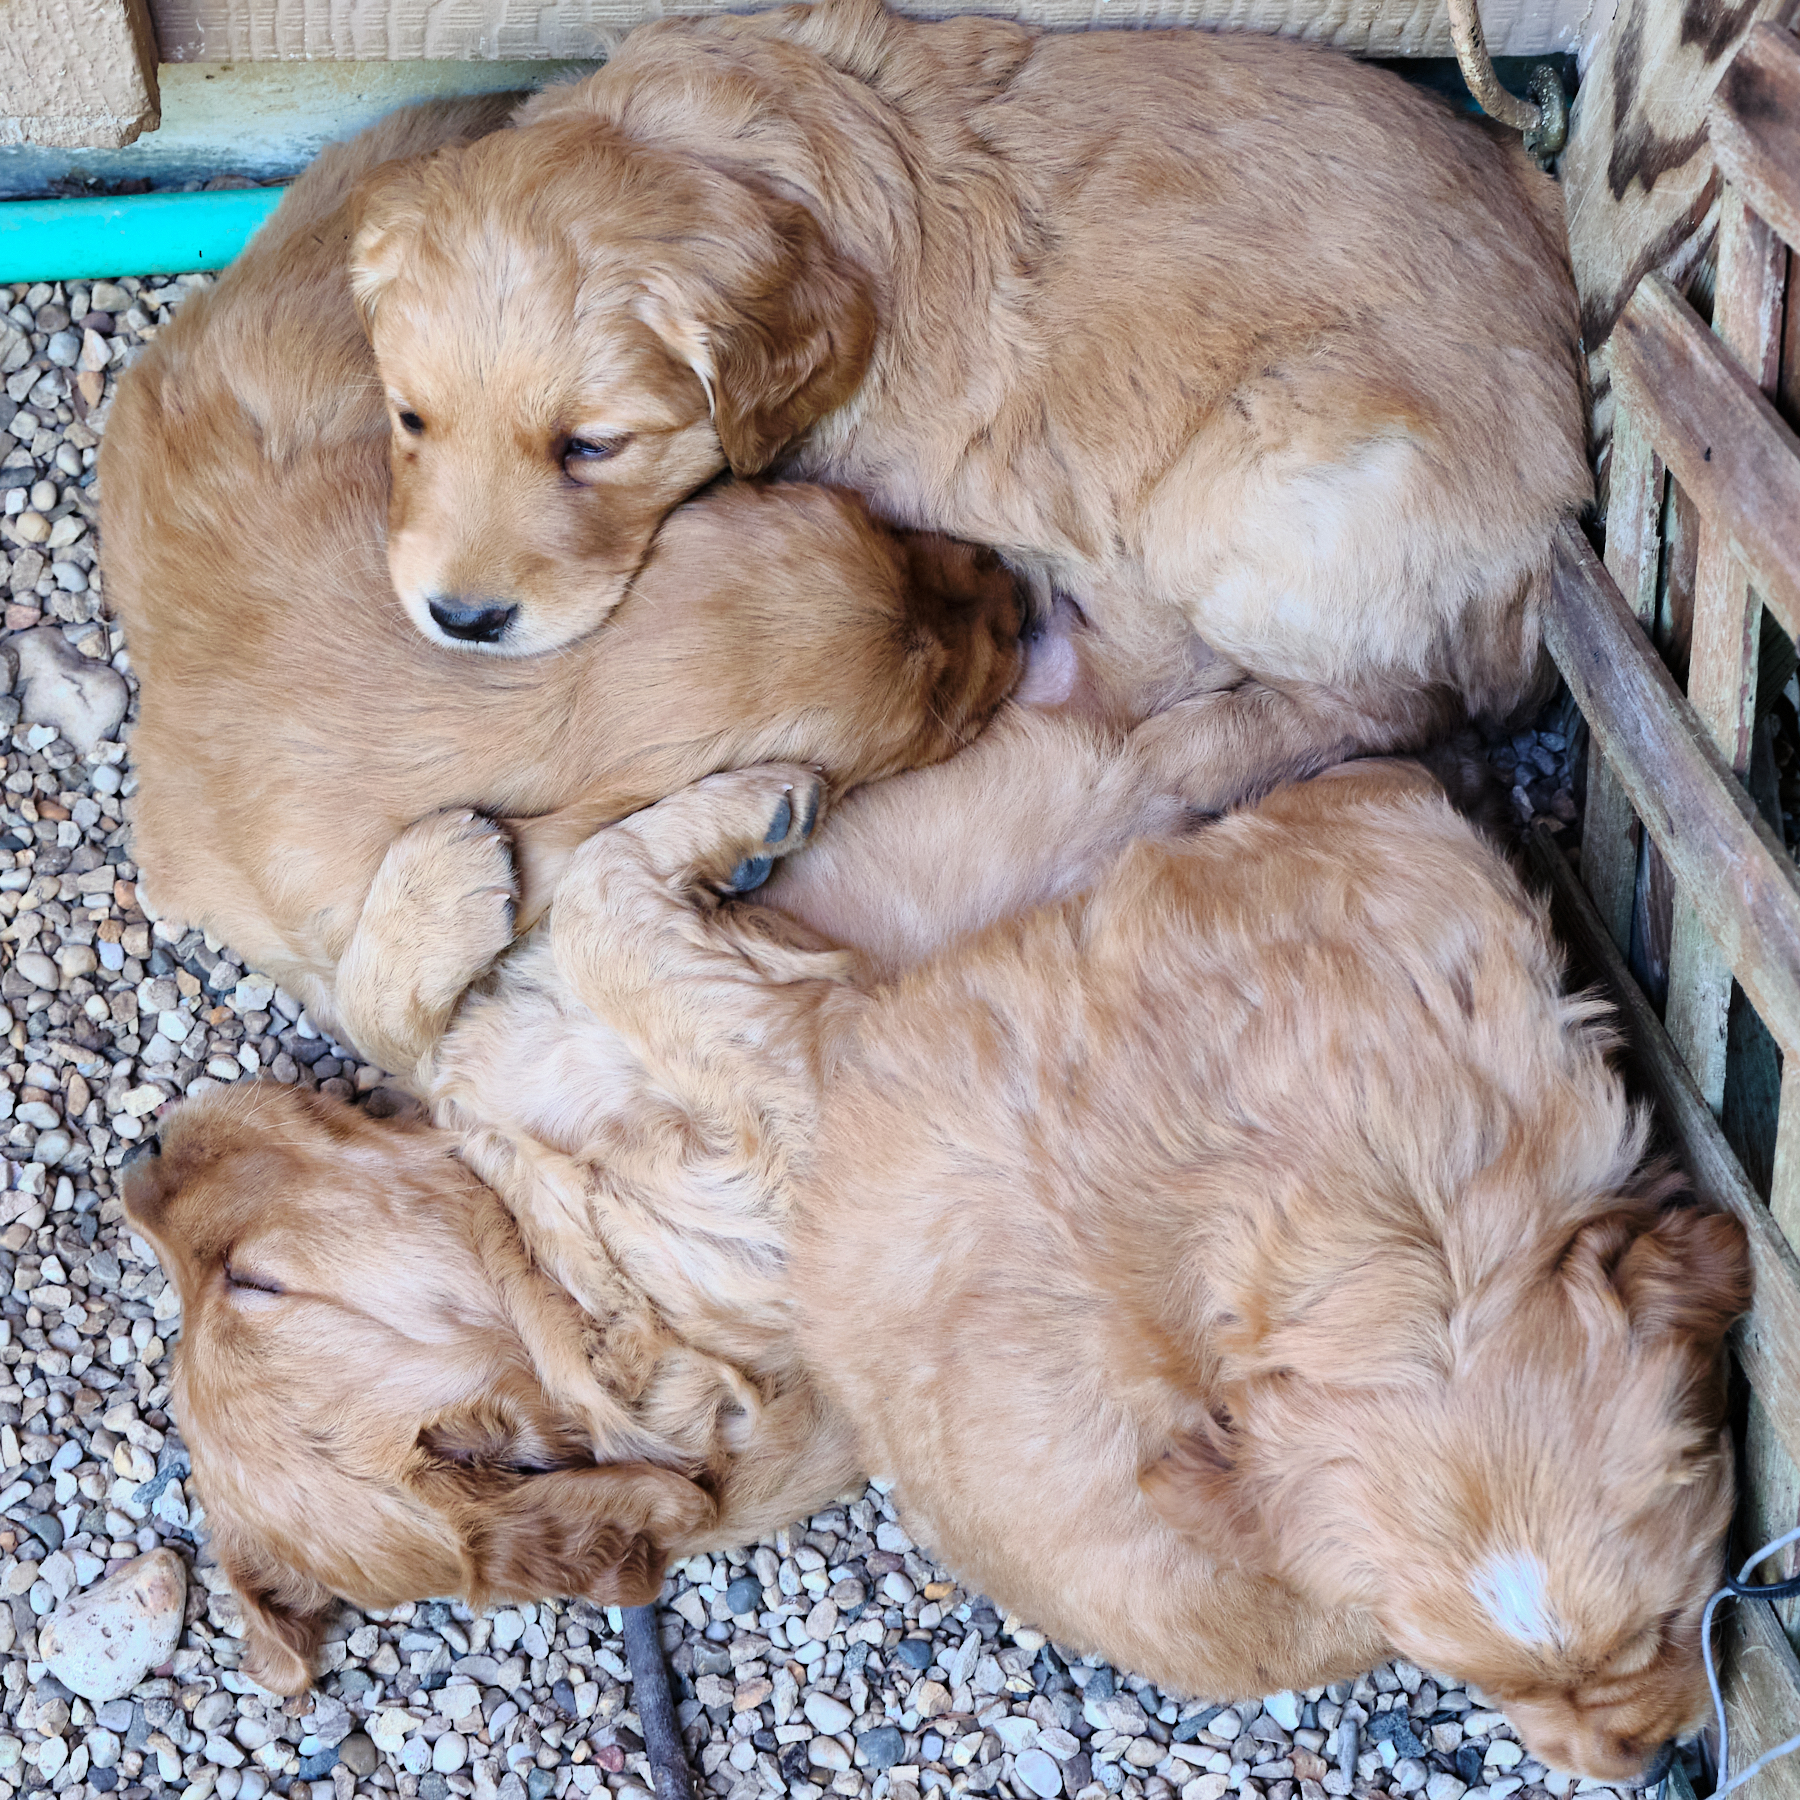 puppies sleeping together